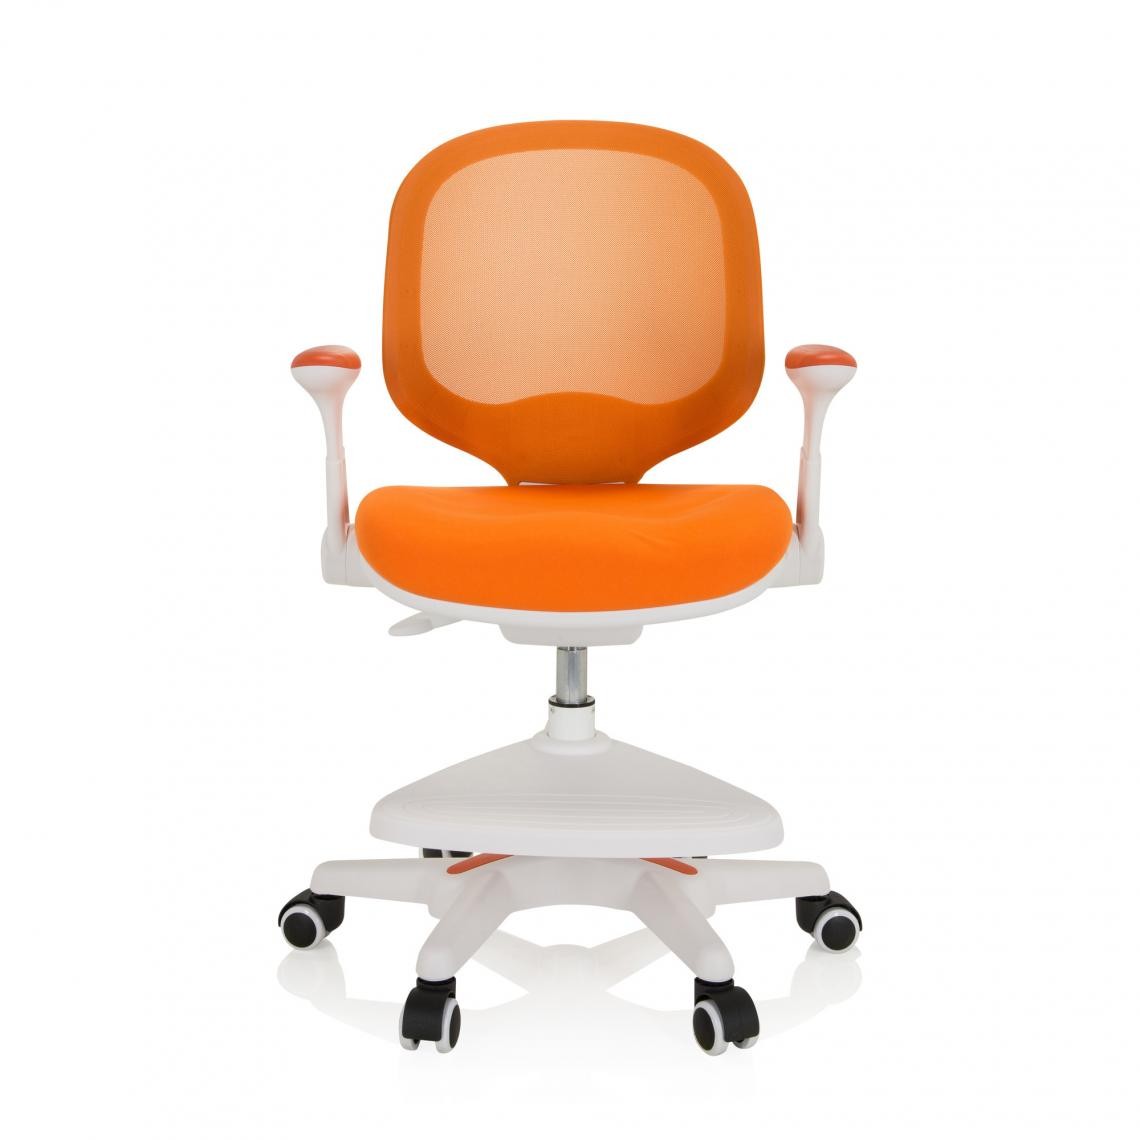 Hjh Office - Chaise de bureau pour enfant KID ERGO Tissu/Tissu maille orange hjh OFFICE - Chaises